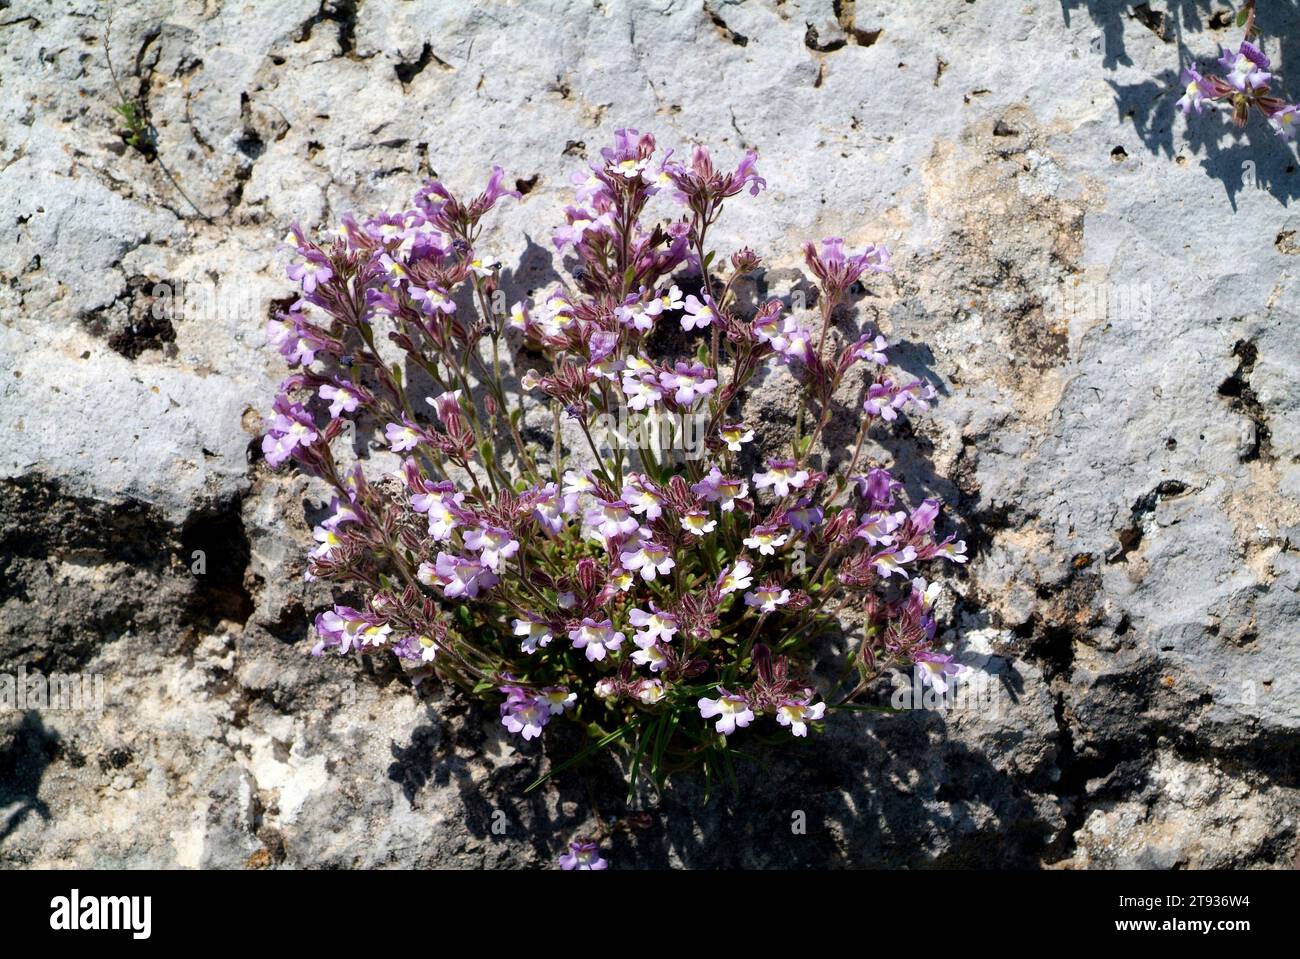 Dwarf oregano-leaved snapdragon (Chaenorhinum origanifolium) is a perennial herb native to west Mediterranian region. This photo was taken in Conca de Stock Photo